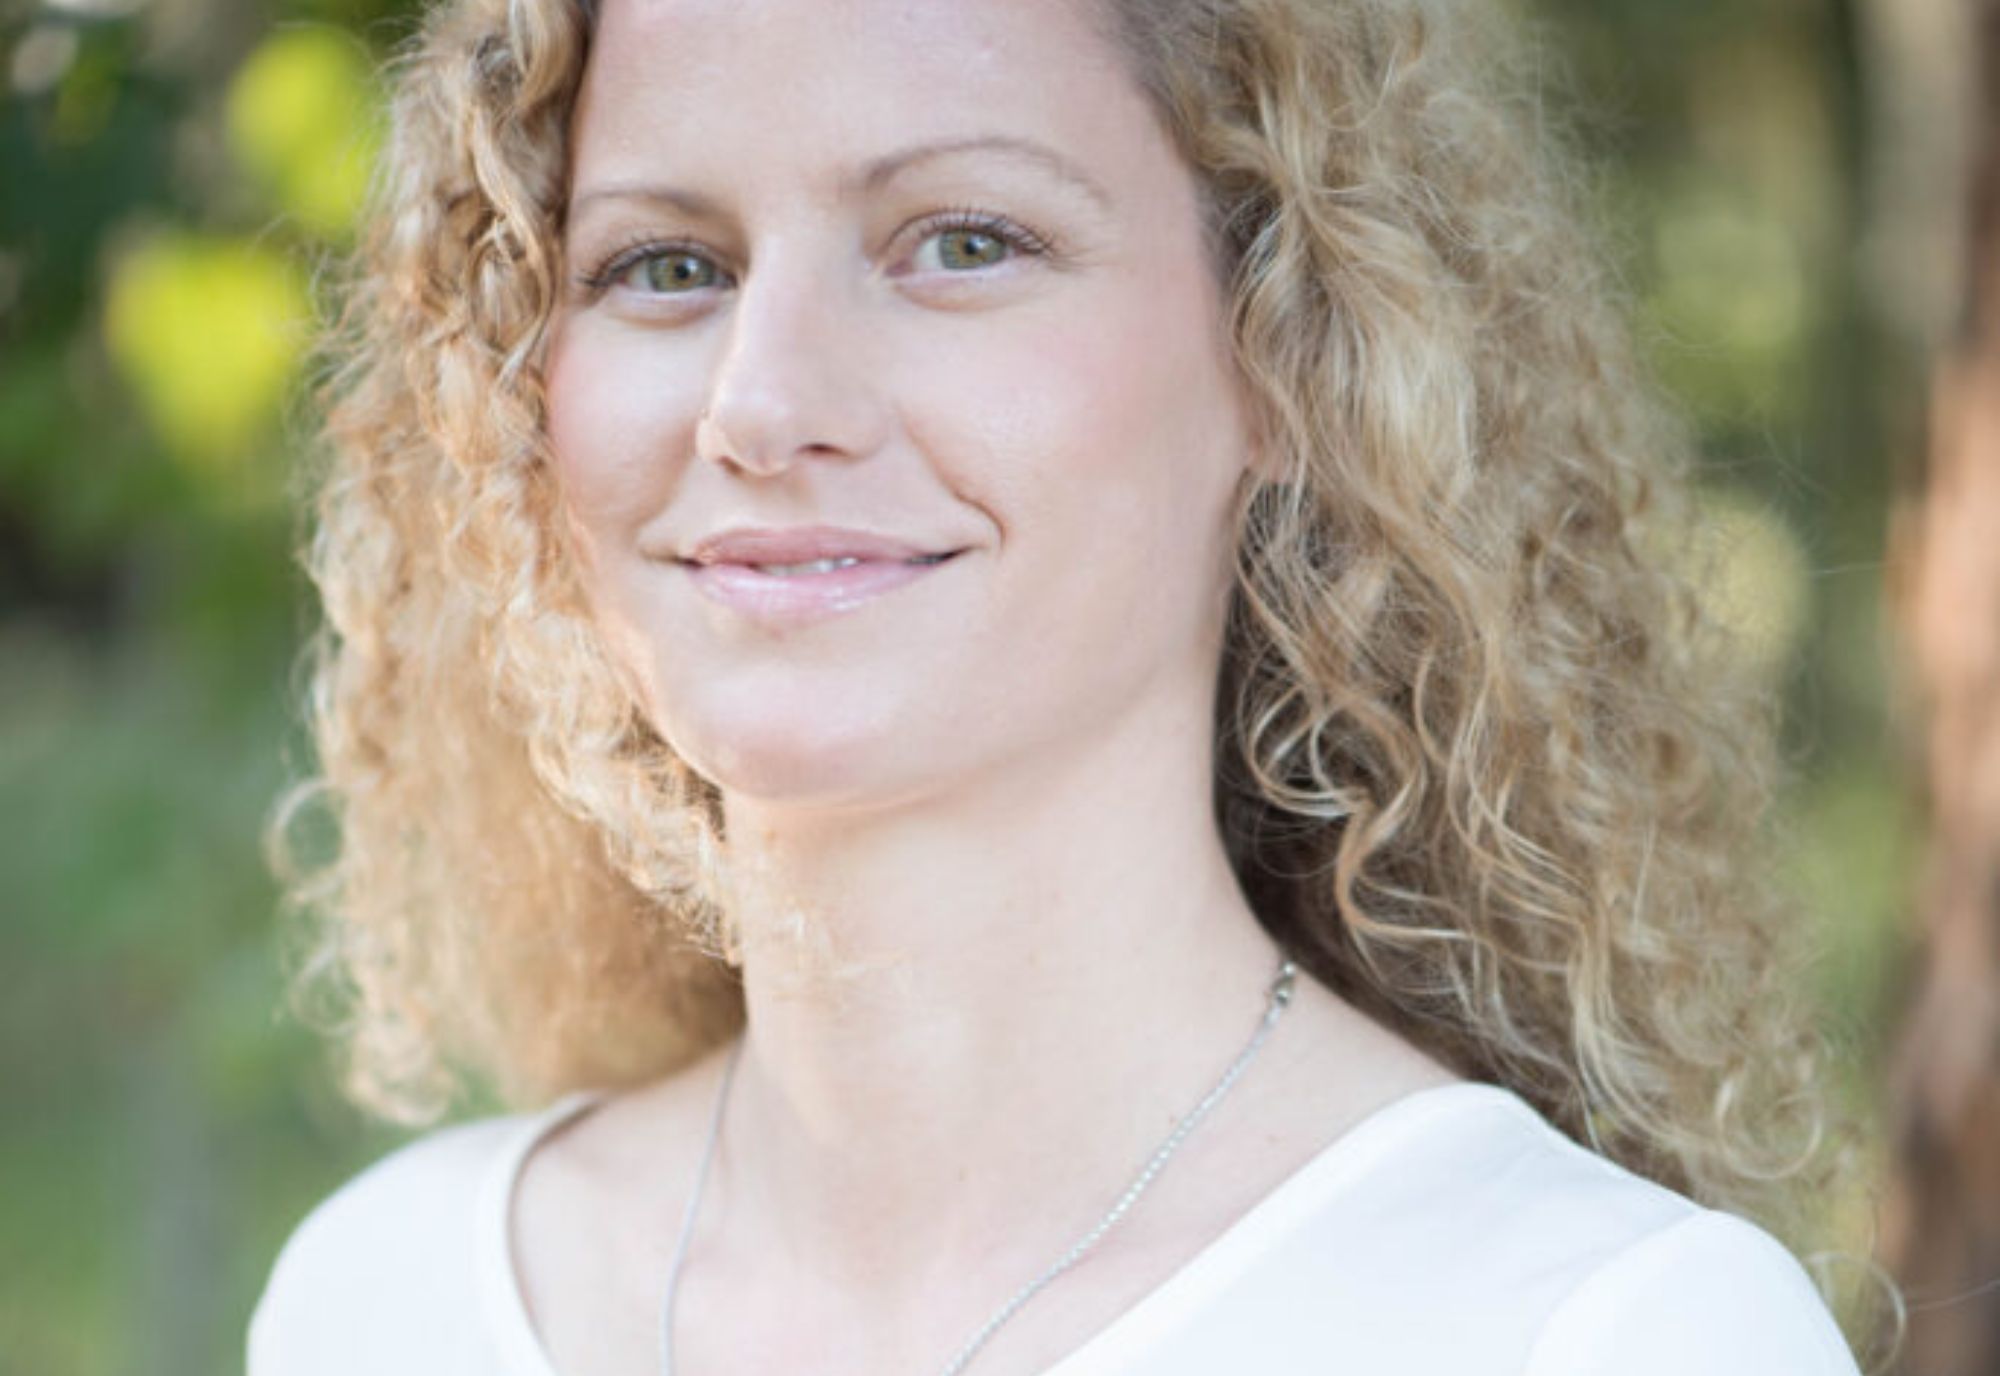 Chelsea Dingman, a poet and alumnae of USF's MFA program